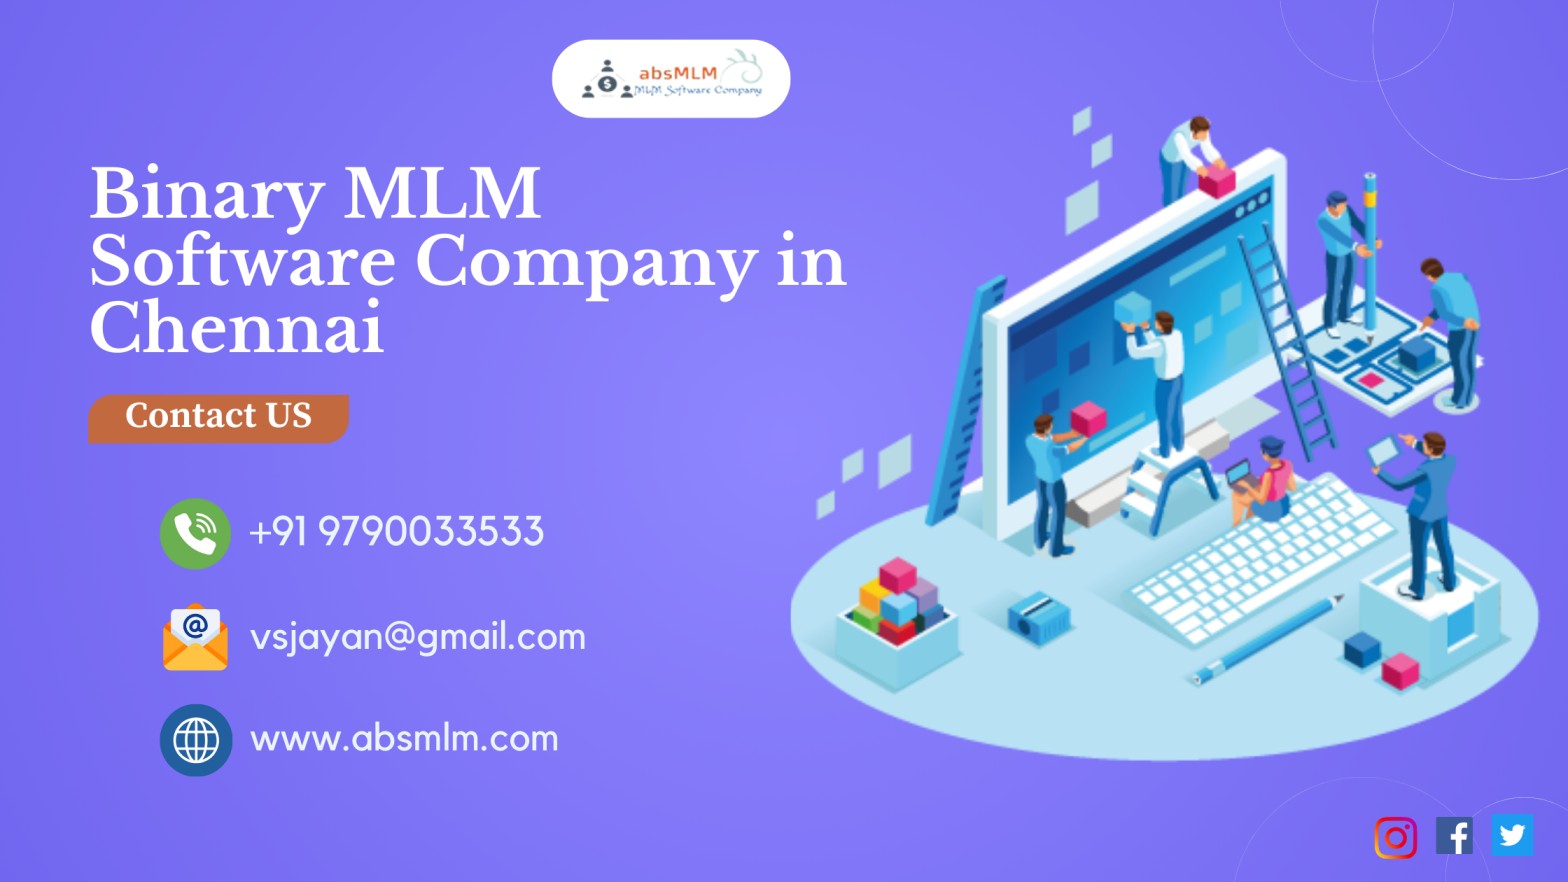 &
Binary MLM
Software Company in
(0113 VEN

Contact US

Q +919790033533 3

pd vsjayan@gmail.com

@ www.absmim.com